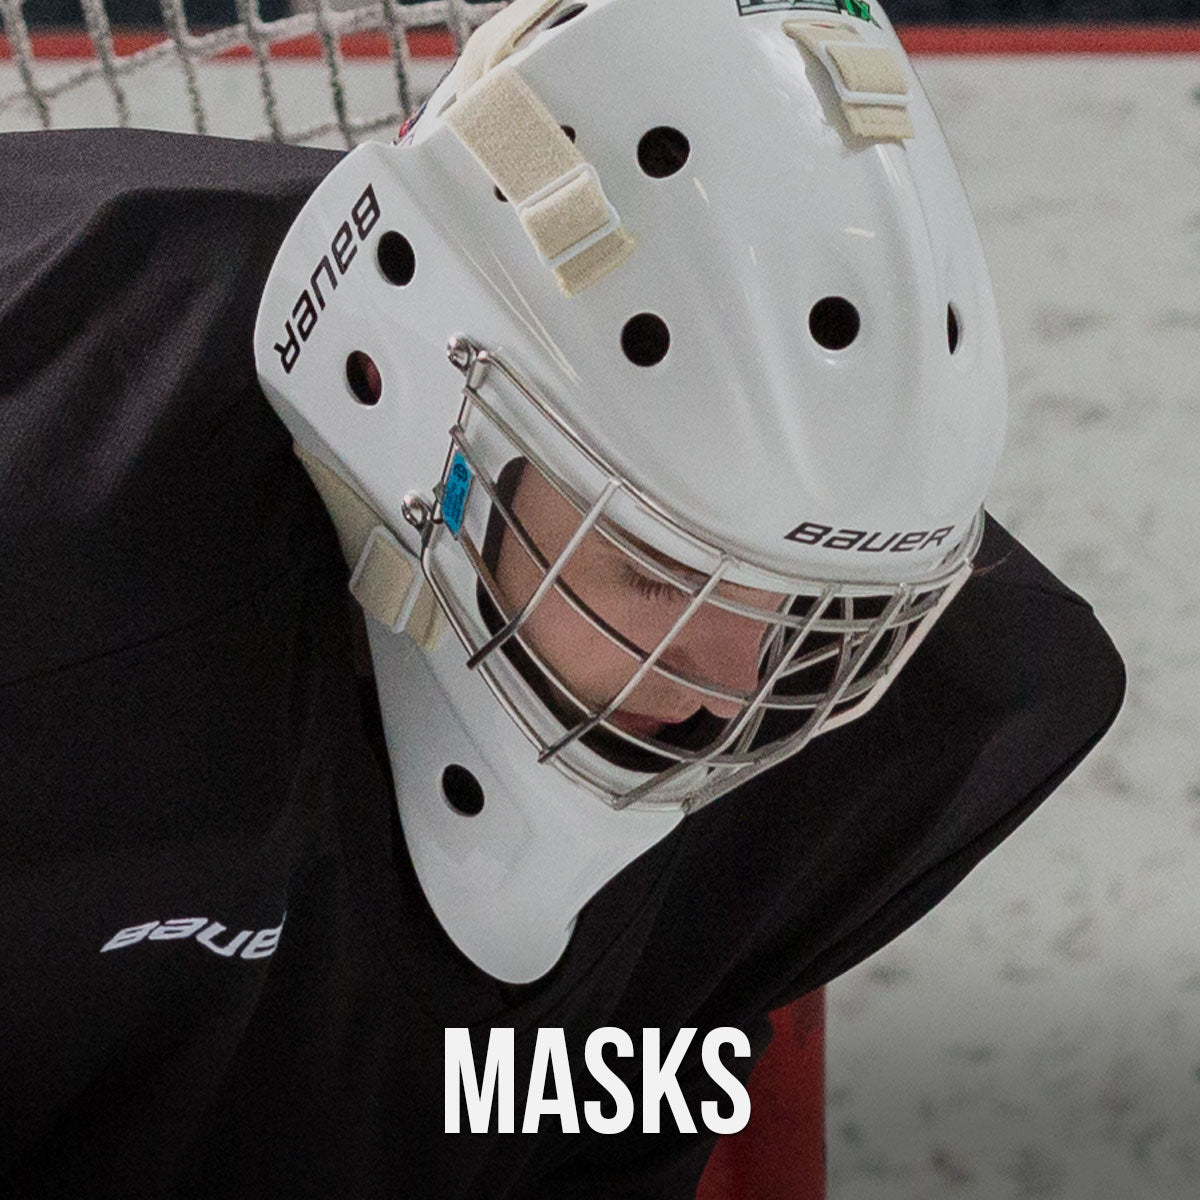 bauer goal masks